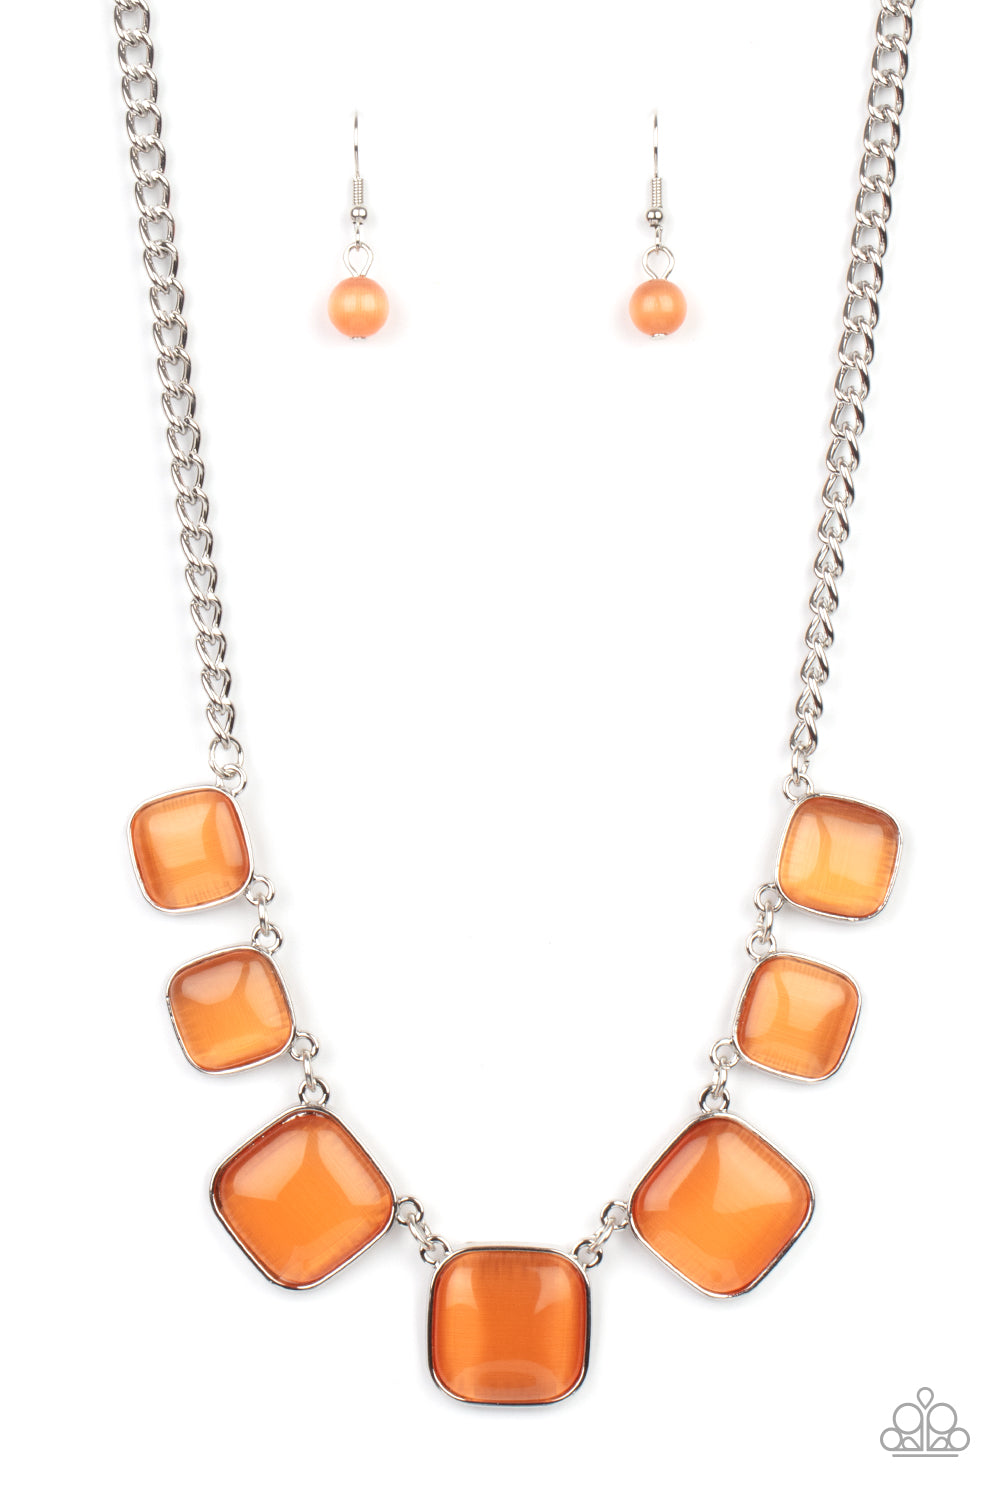 Paparazzi Accessories Aura Allure - Orange Necklaces - Lady T Accessories